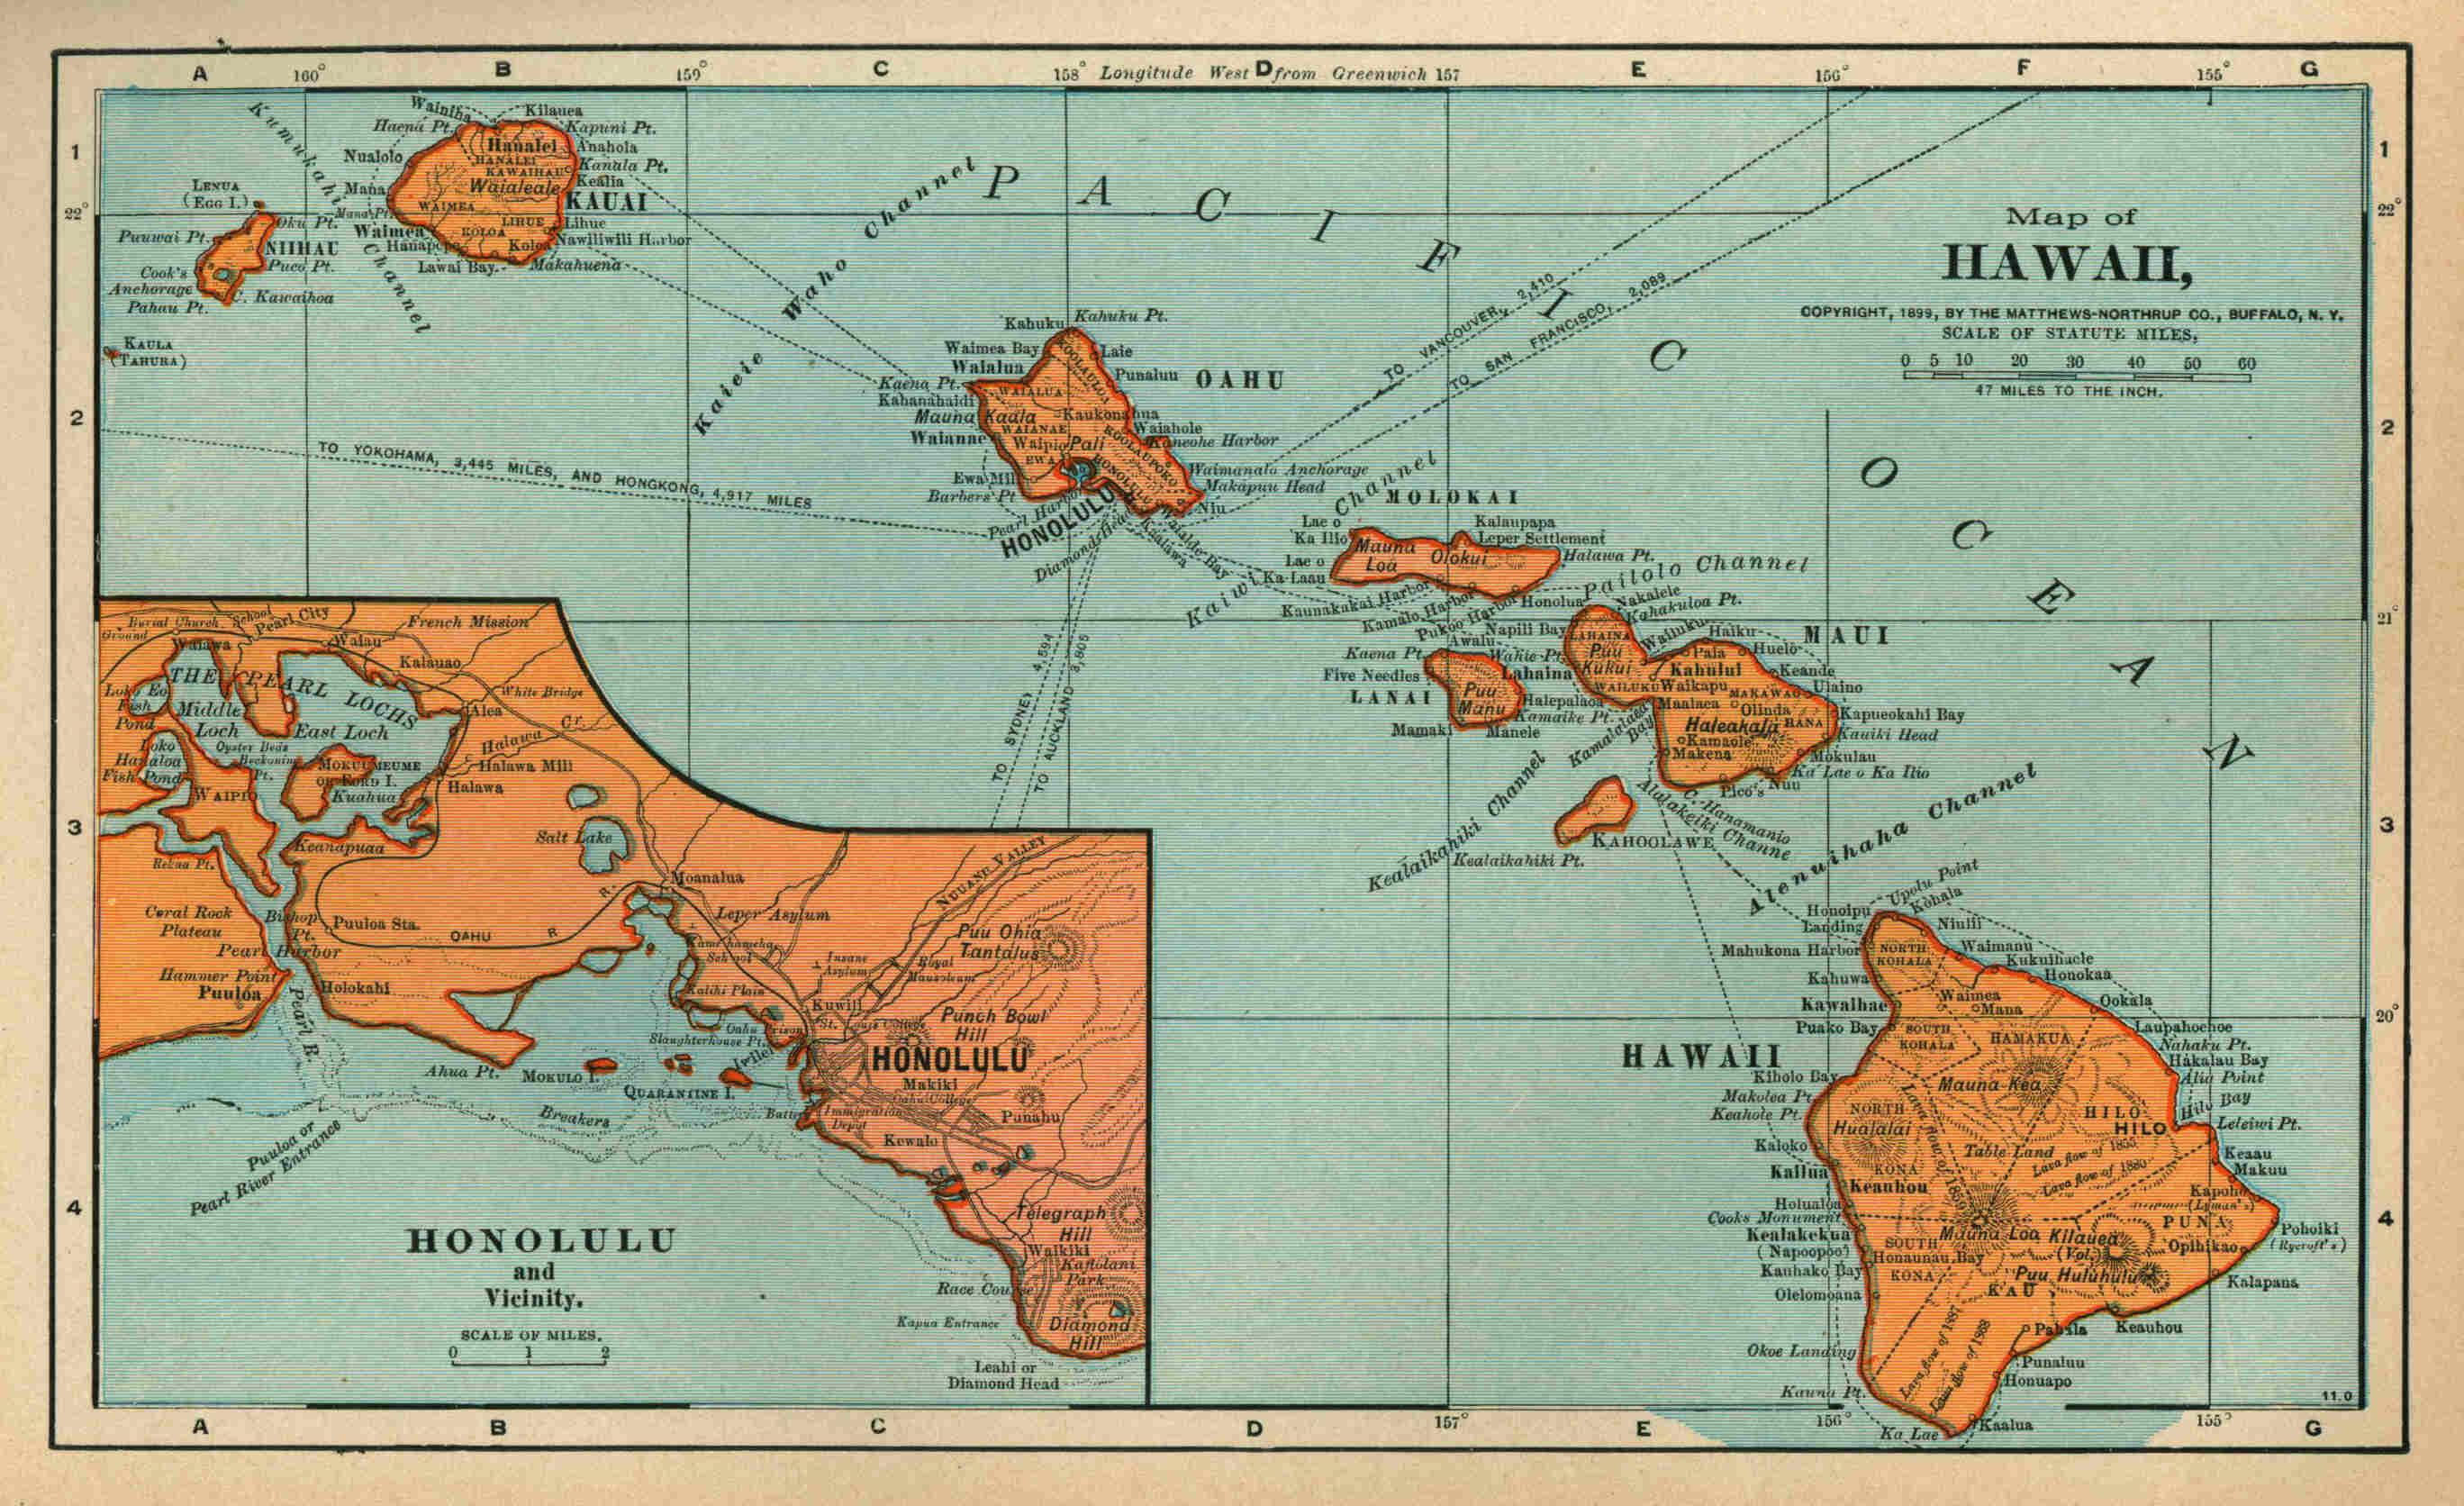 Map of Hawaii and Honolulu.